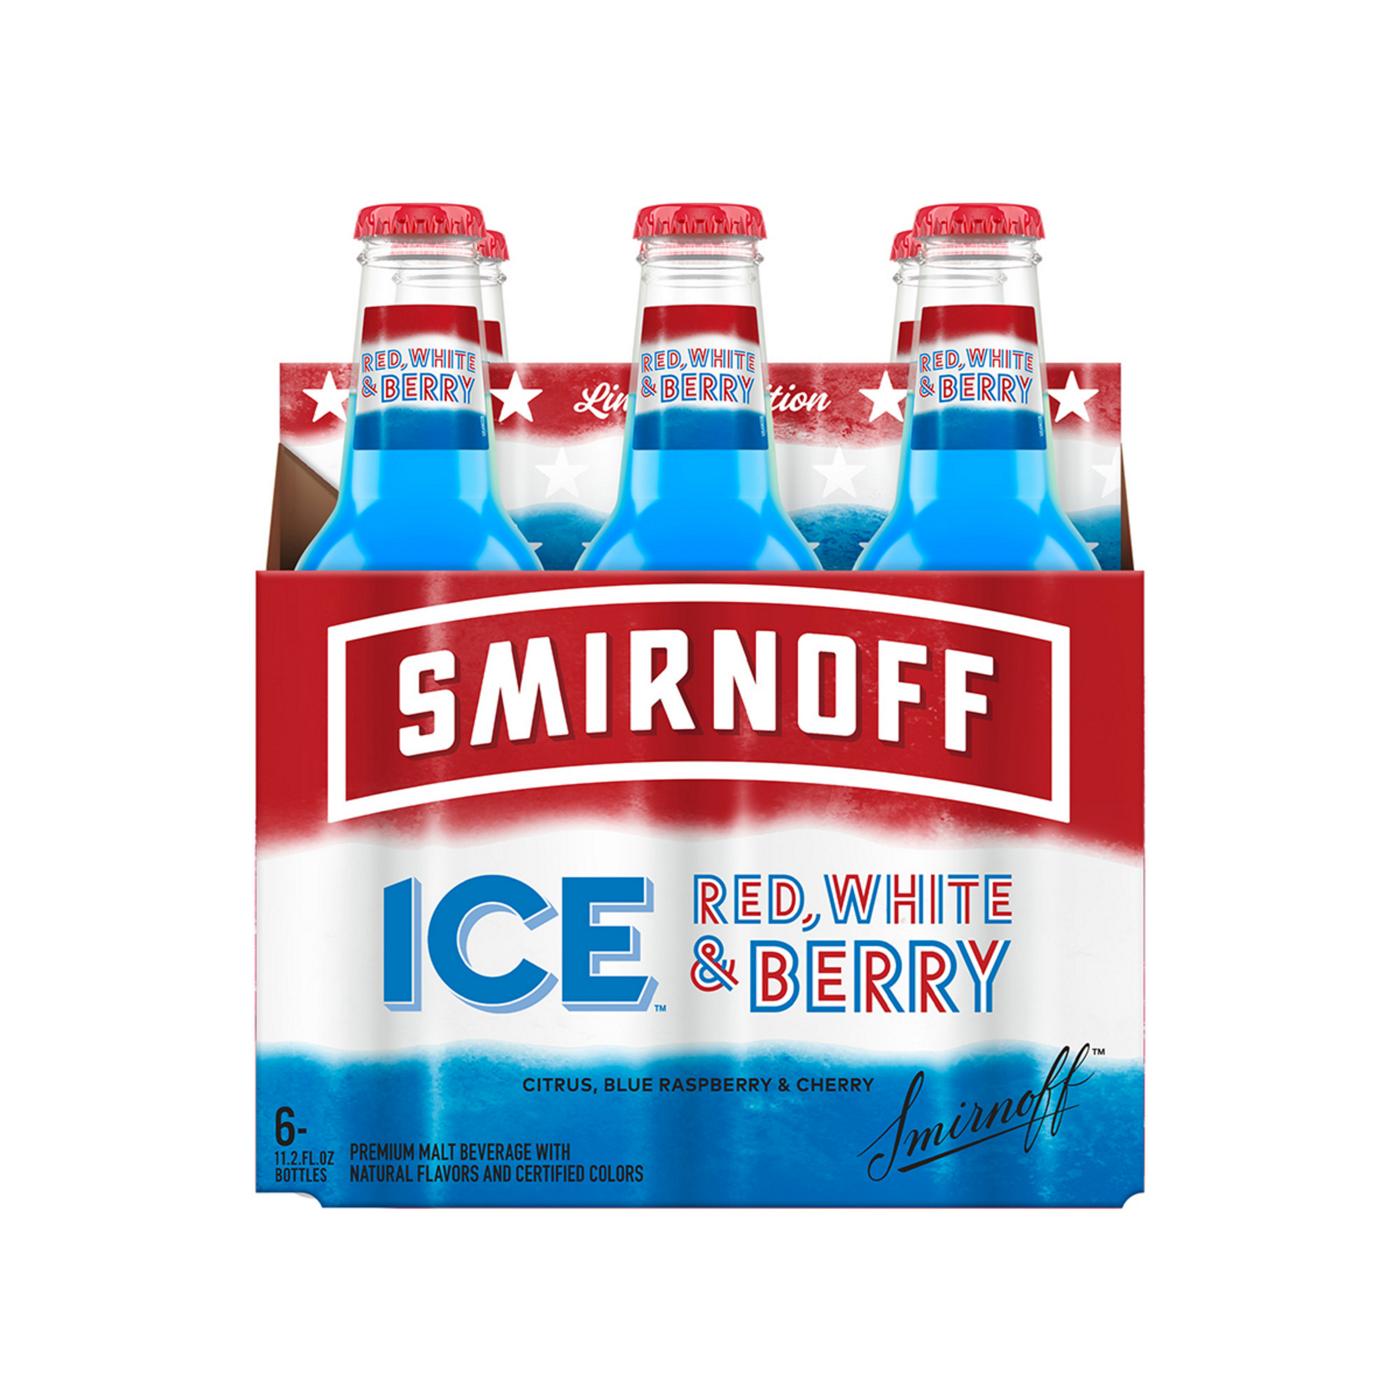 Smirnoff Ice Red, White, Berry; image 2 of 5